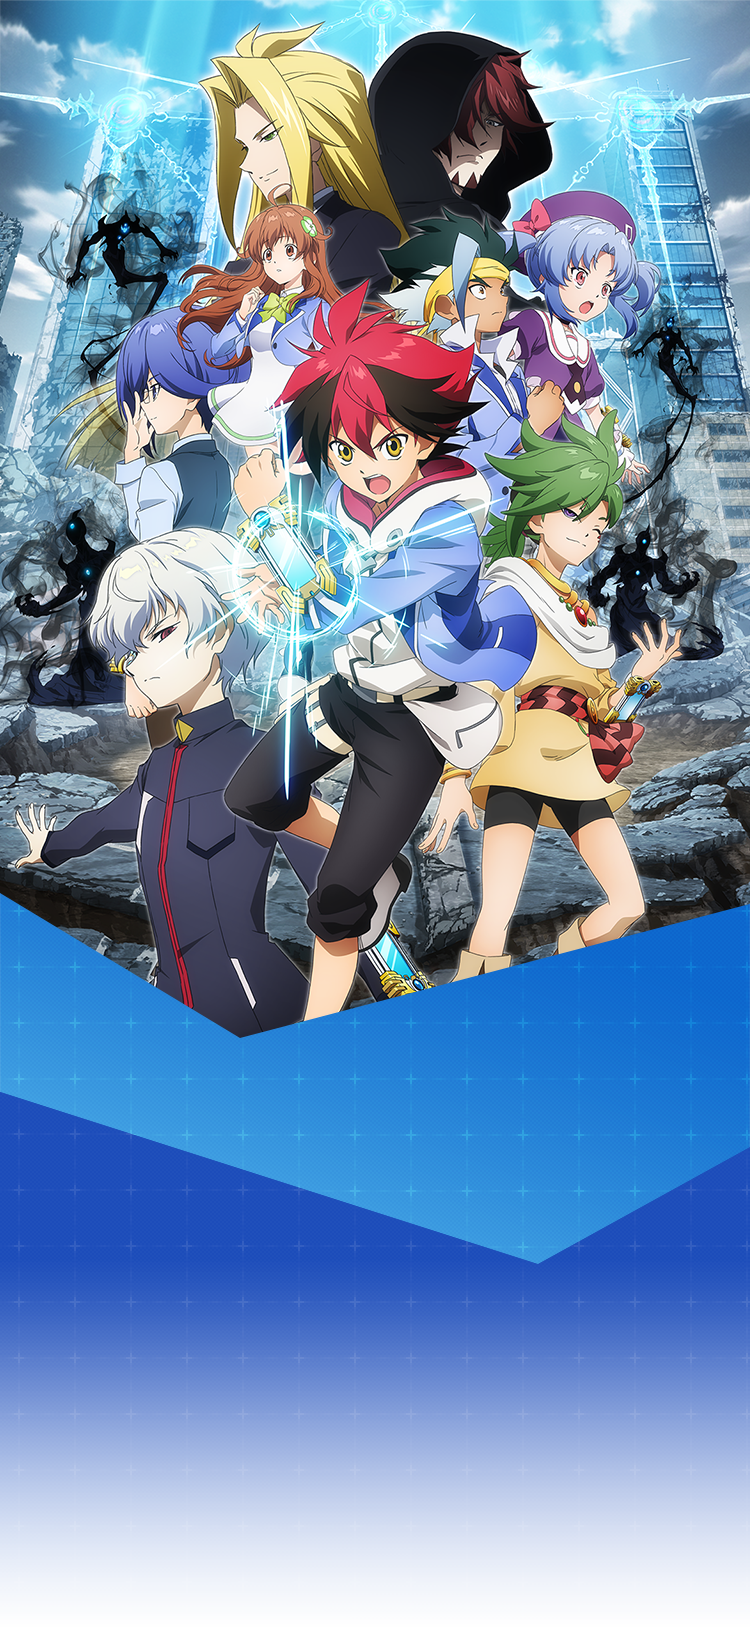 Anime Card - Free Download on Freepik